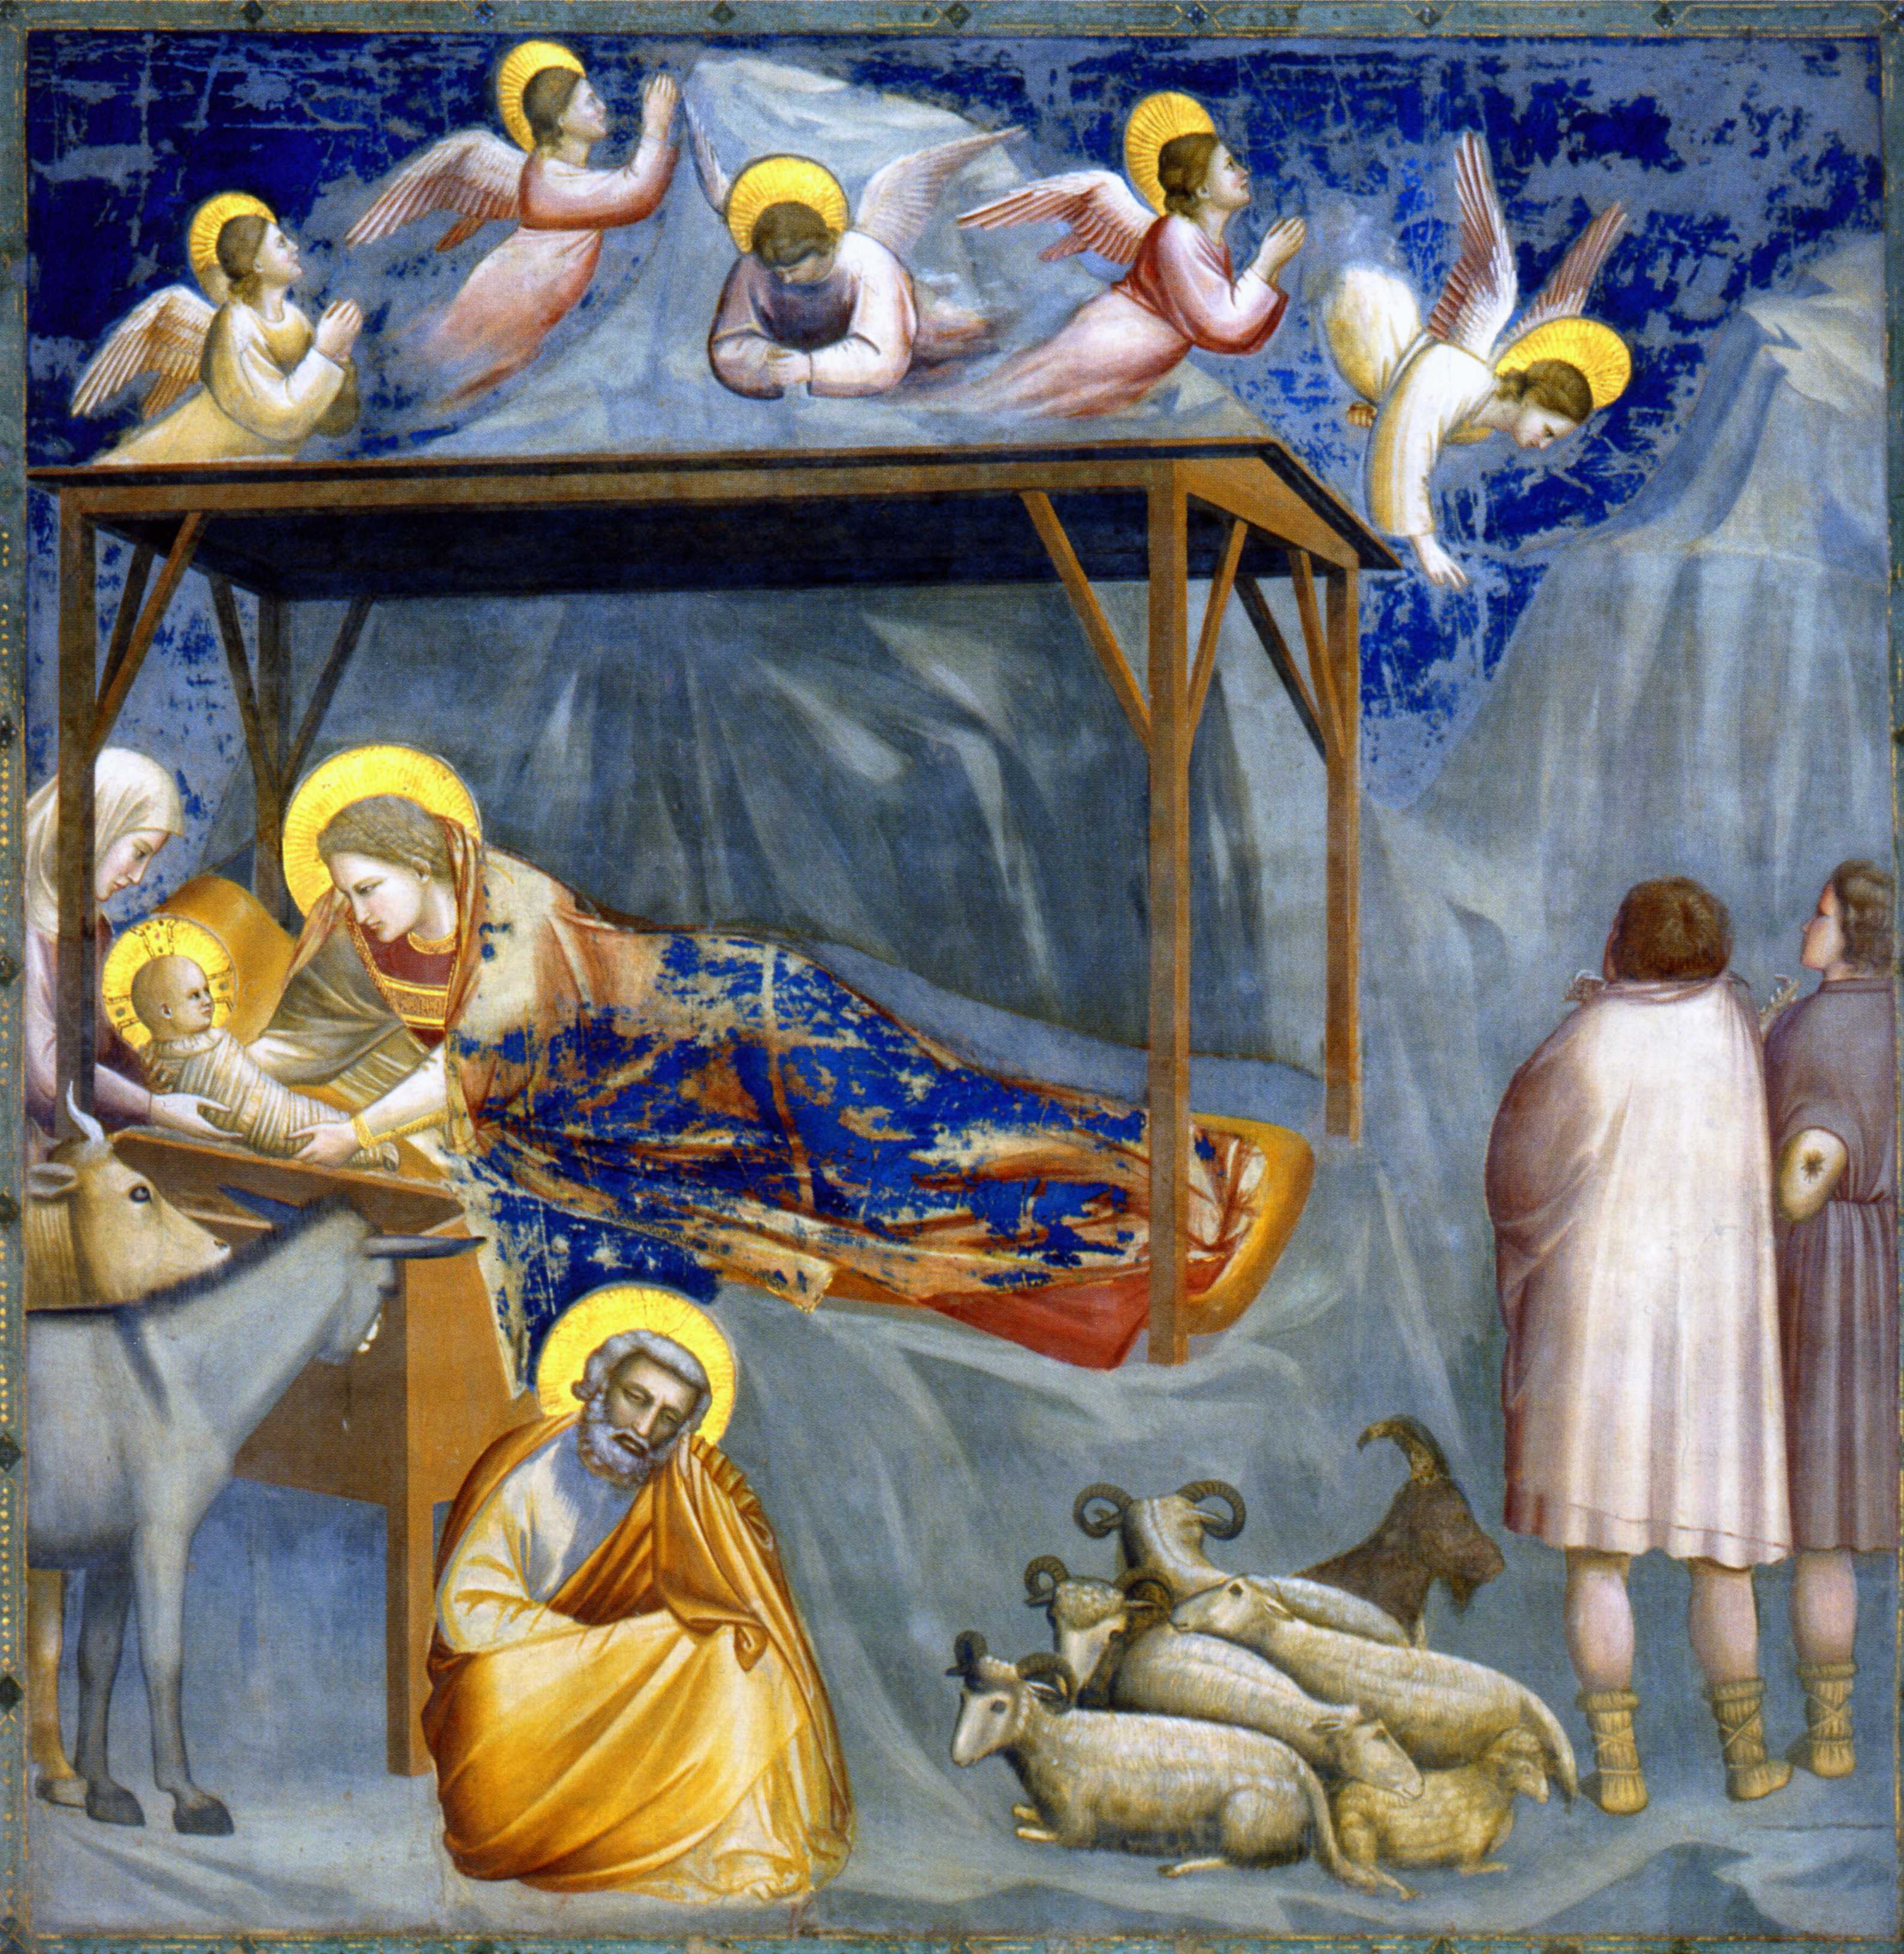 Giotto di Bondone (1267-1337), Nativité, 1304-1306, fresque, 200 x 185 cm, Padoue, chapelle Scrovegni